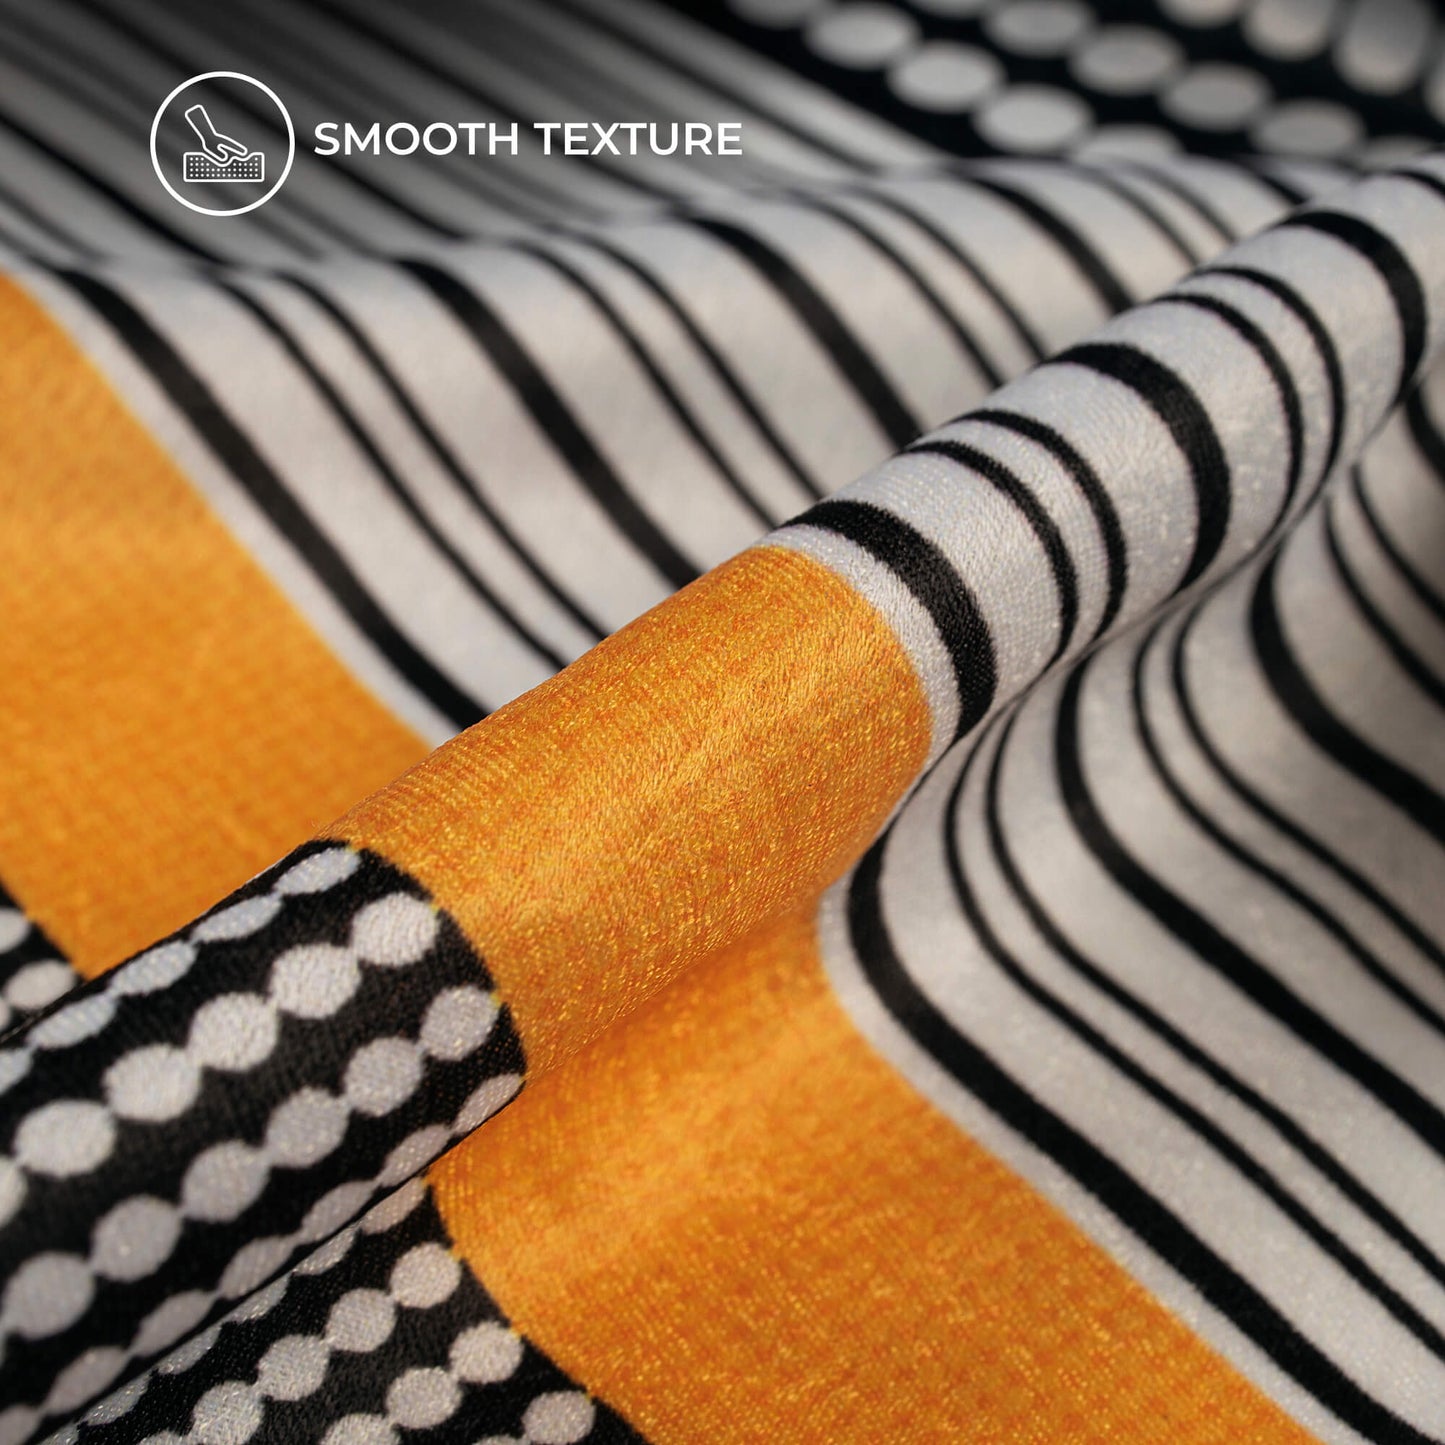 Attractive Polka Stripes Digital Print Lush Satin Fabric